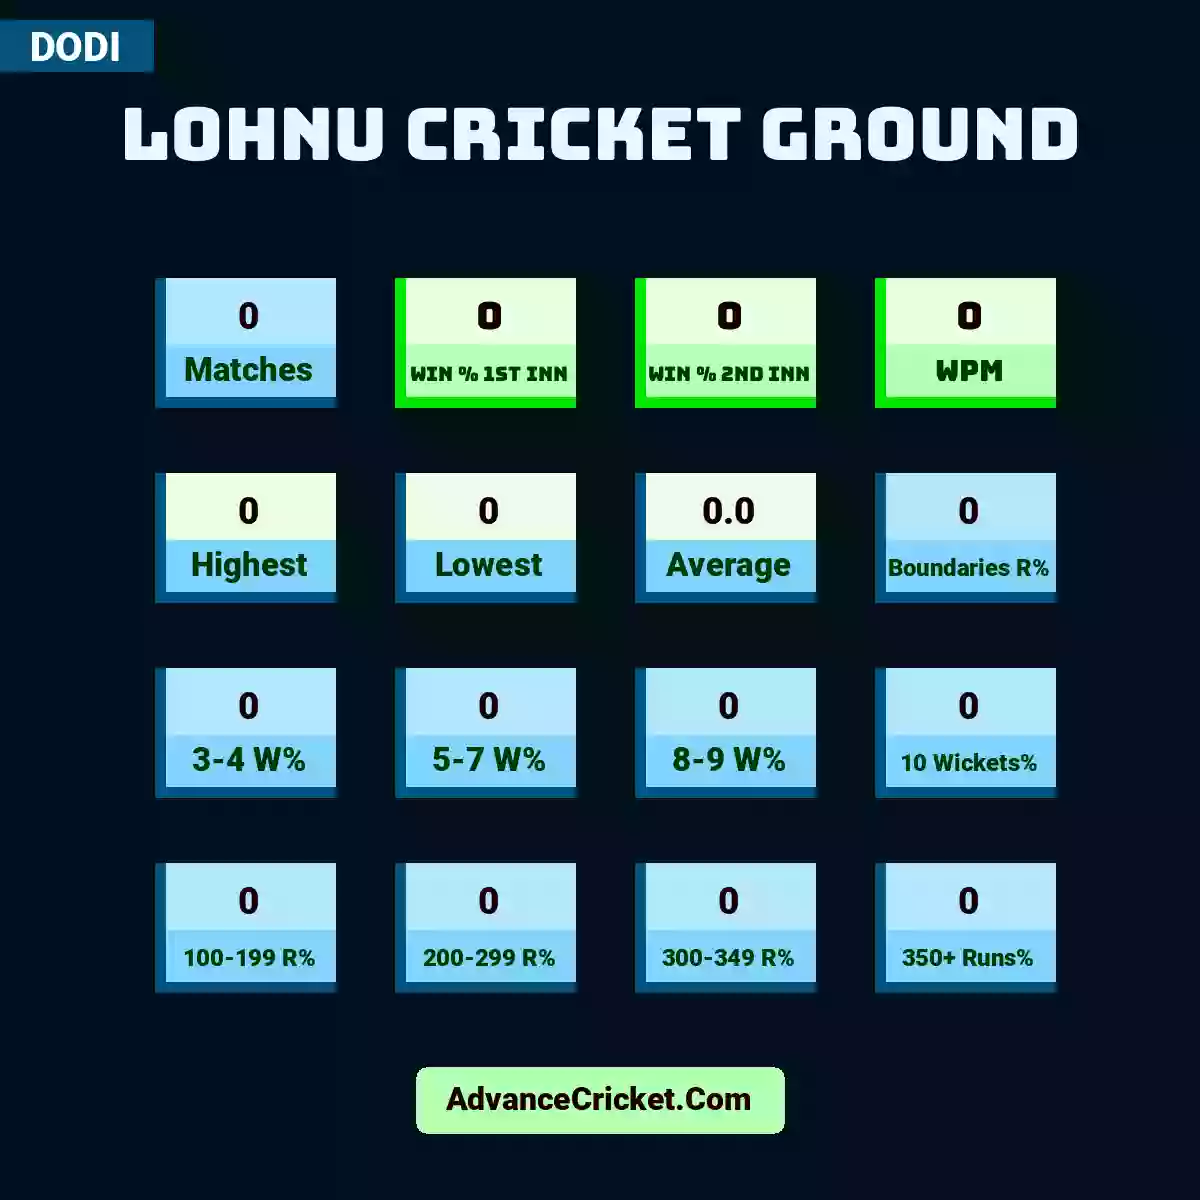 Image showing Lohnu Cricket Ground with Matches: 0, Win % 1st Inn: 0, Win % 2nd Inn: 0, WPM: 0, Highest: 0, Lowest: 0, Average: 0.0, Boundaries R%: 0, 3-4 W%: 0, 5-7 W%: 0, 8-9 W%: 0, 10 Wickets%: 0, 100-199 R%: 0, 200-299 R%: 0, 300-349 R%: 0, 350+ Runs%: 0.